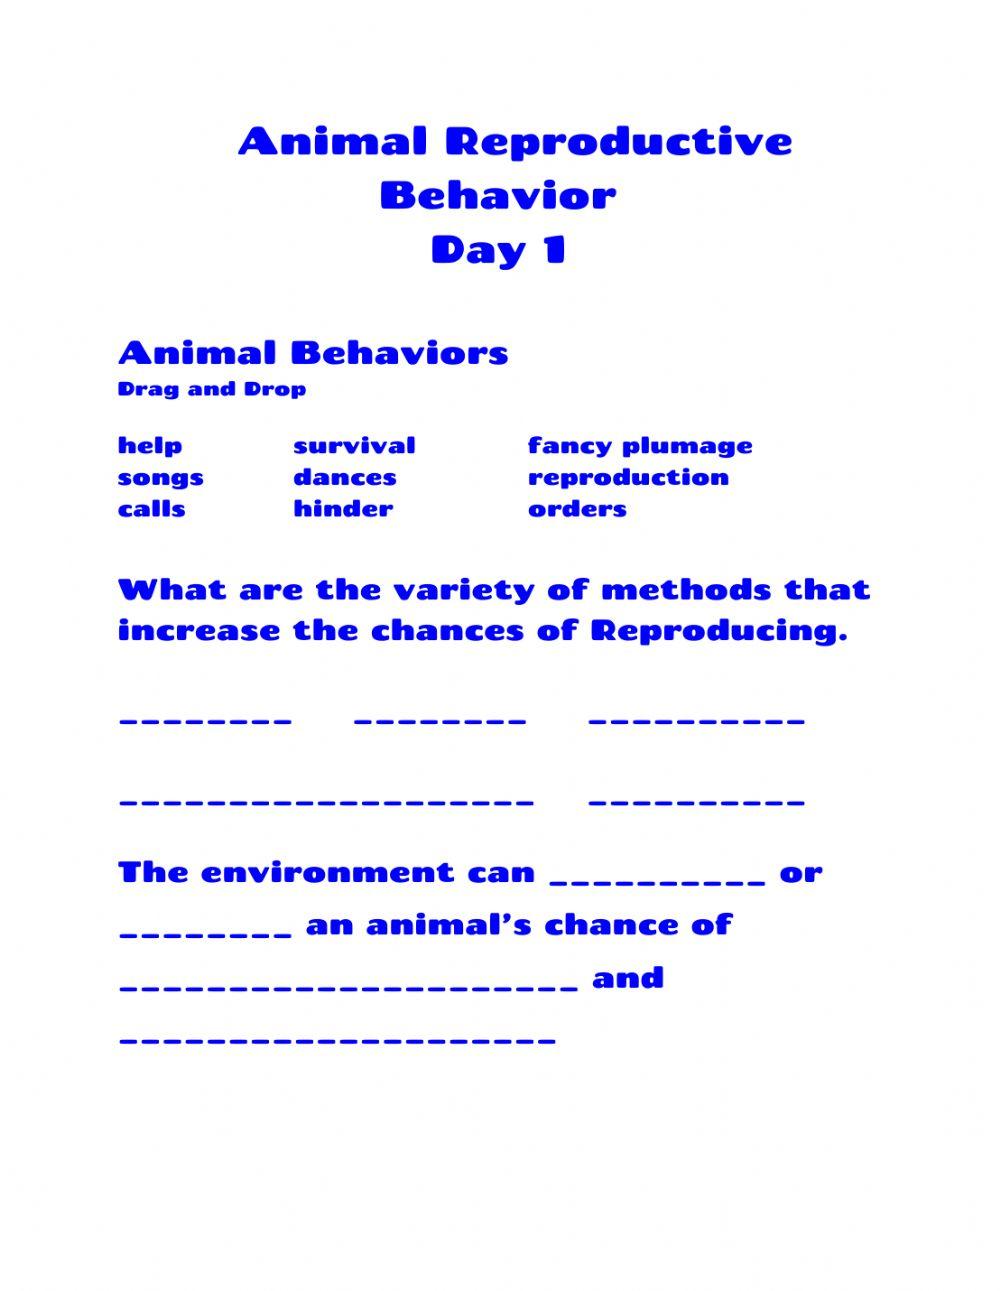 Animal Reproductive Behaviors Day 1